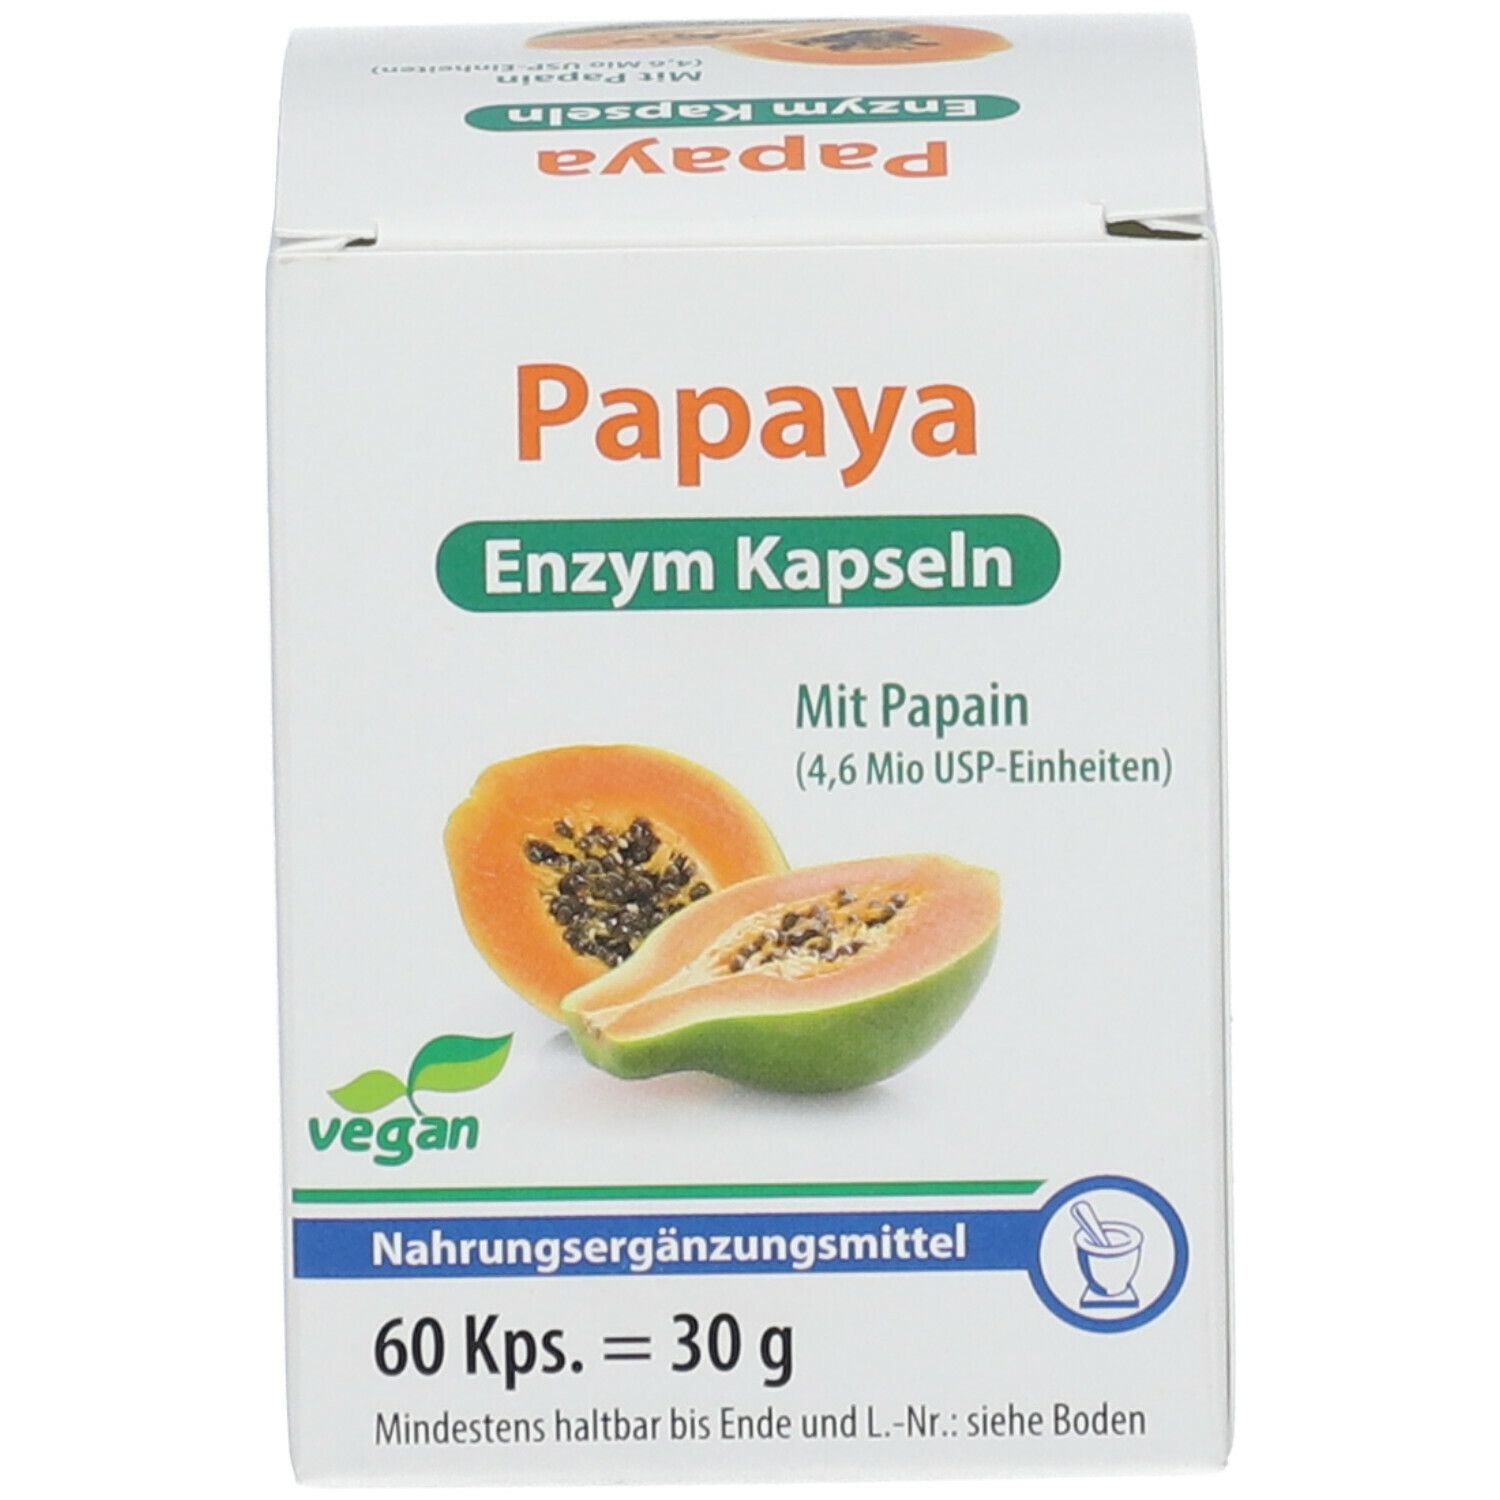 Papaya Enzym Kapseln